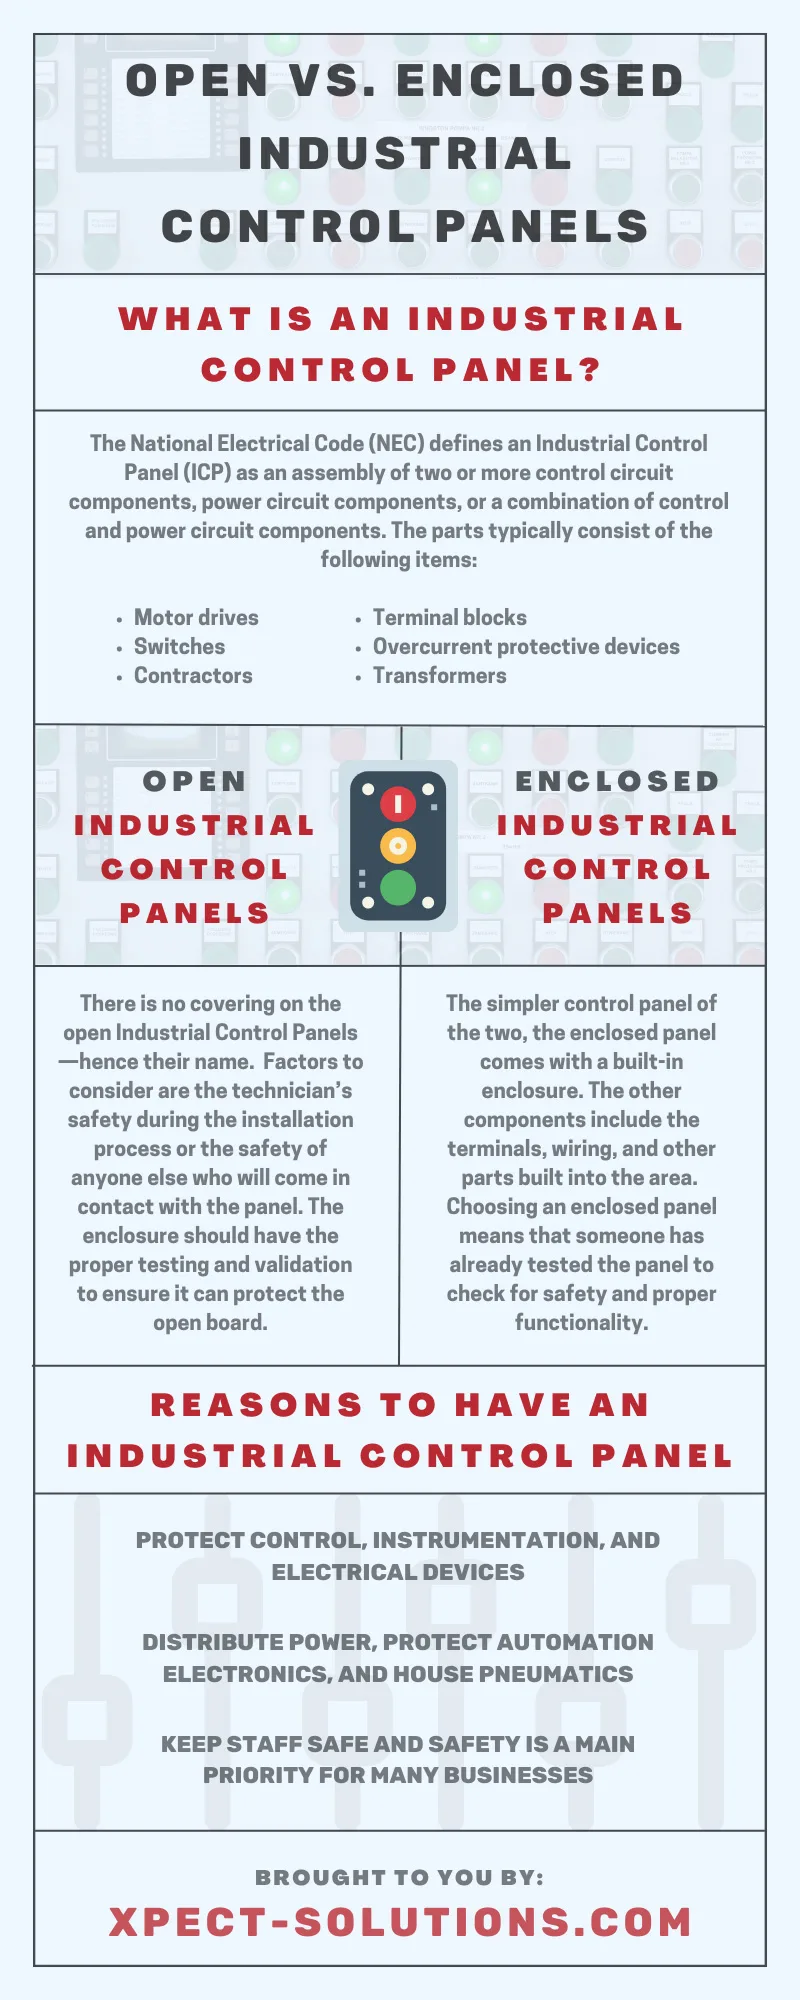 Open vs. Enclosed Industrial Control Panels